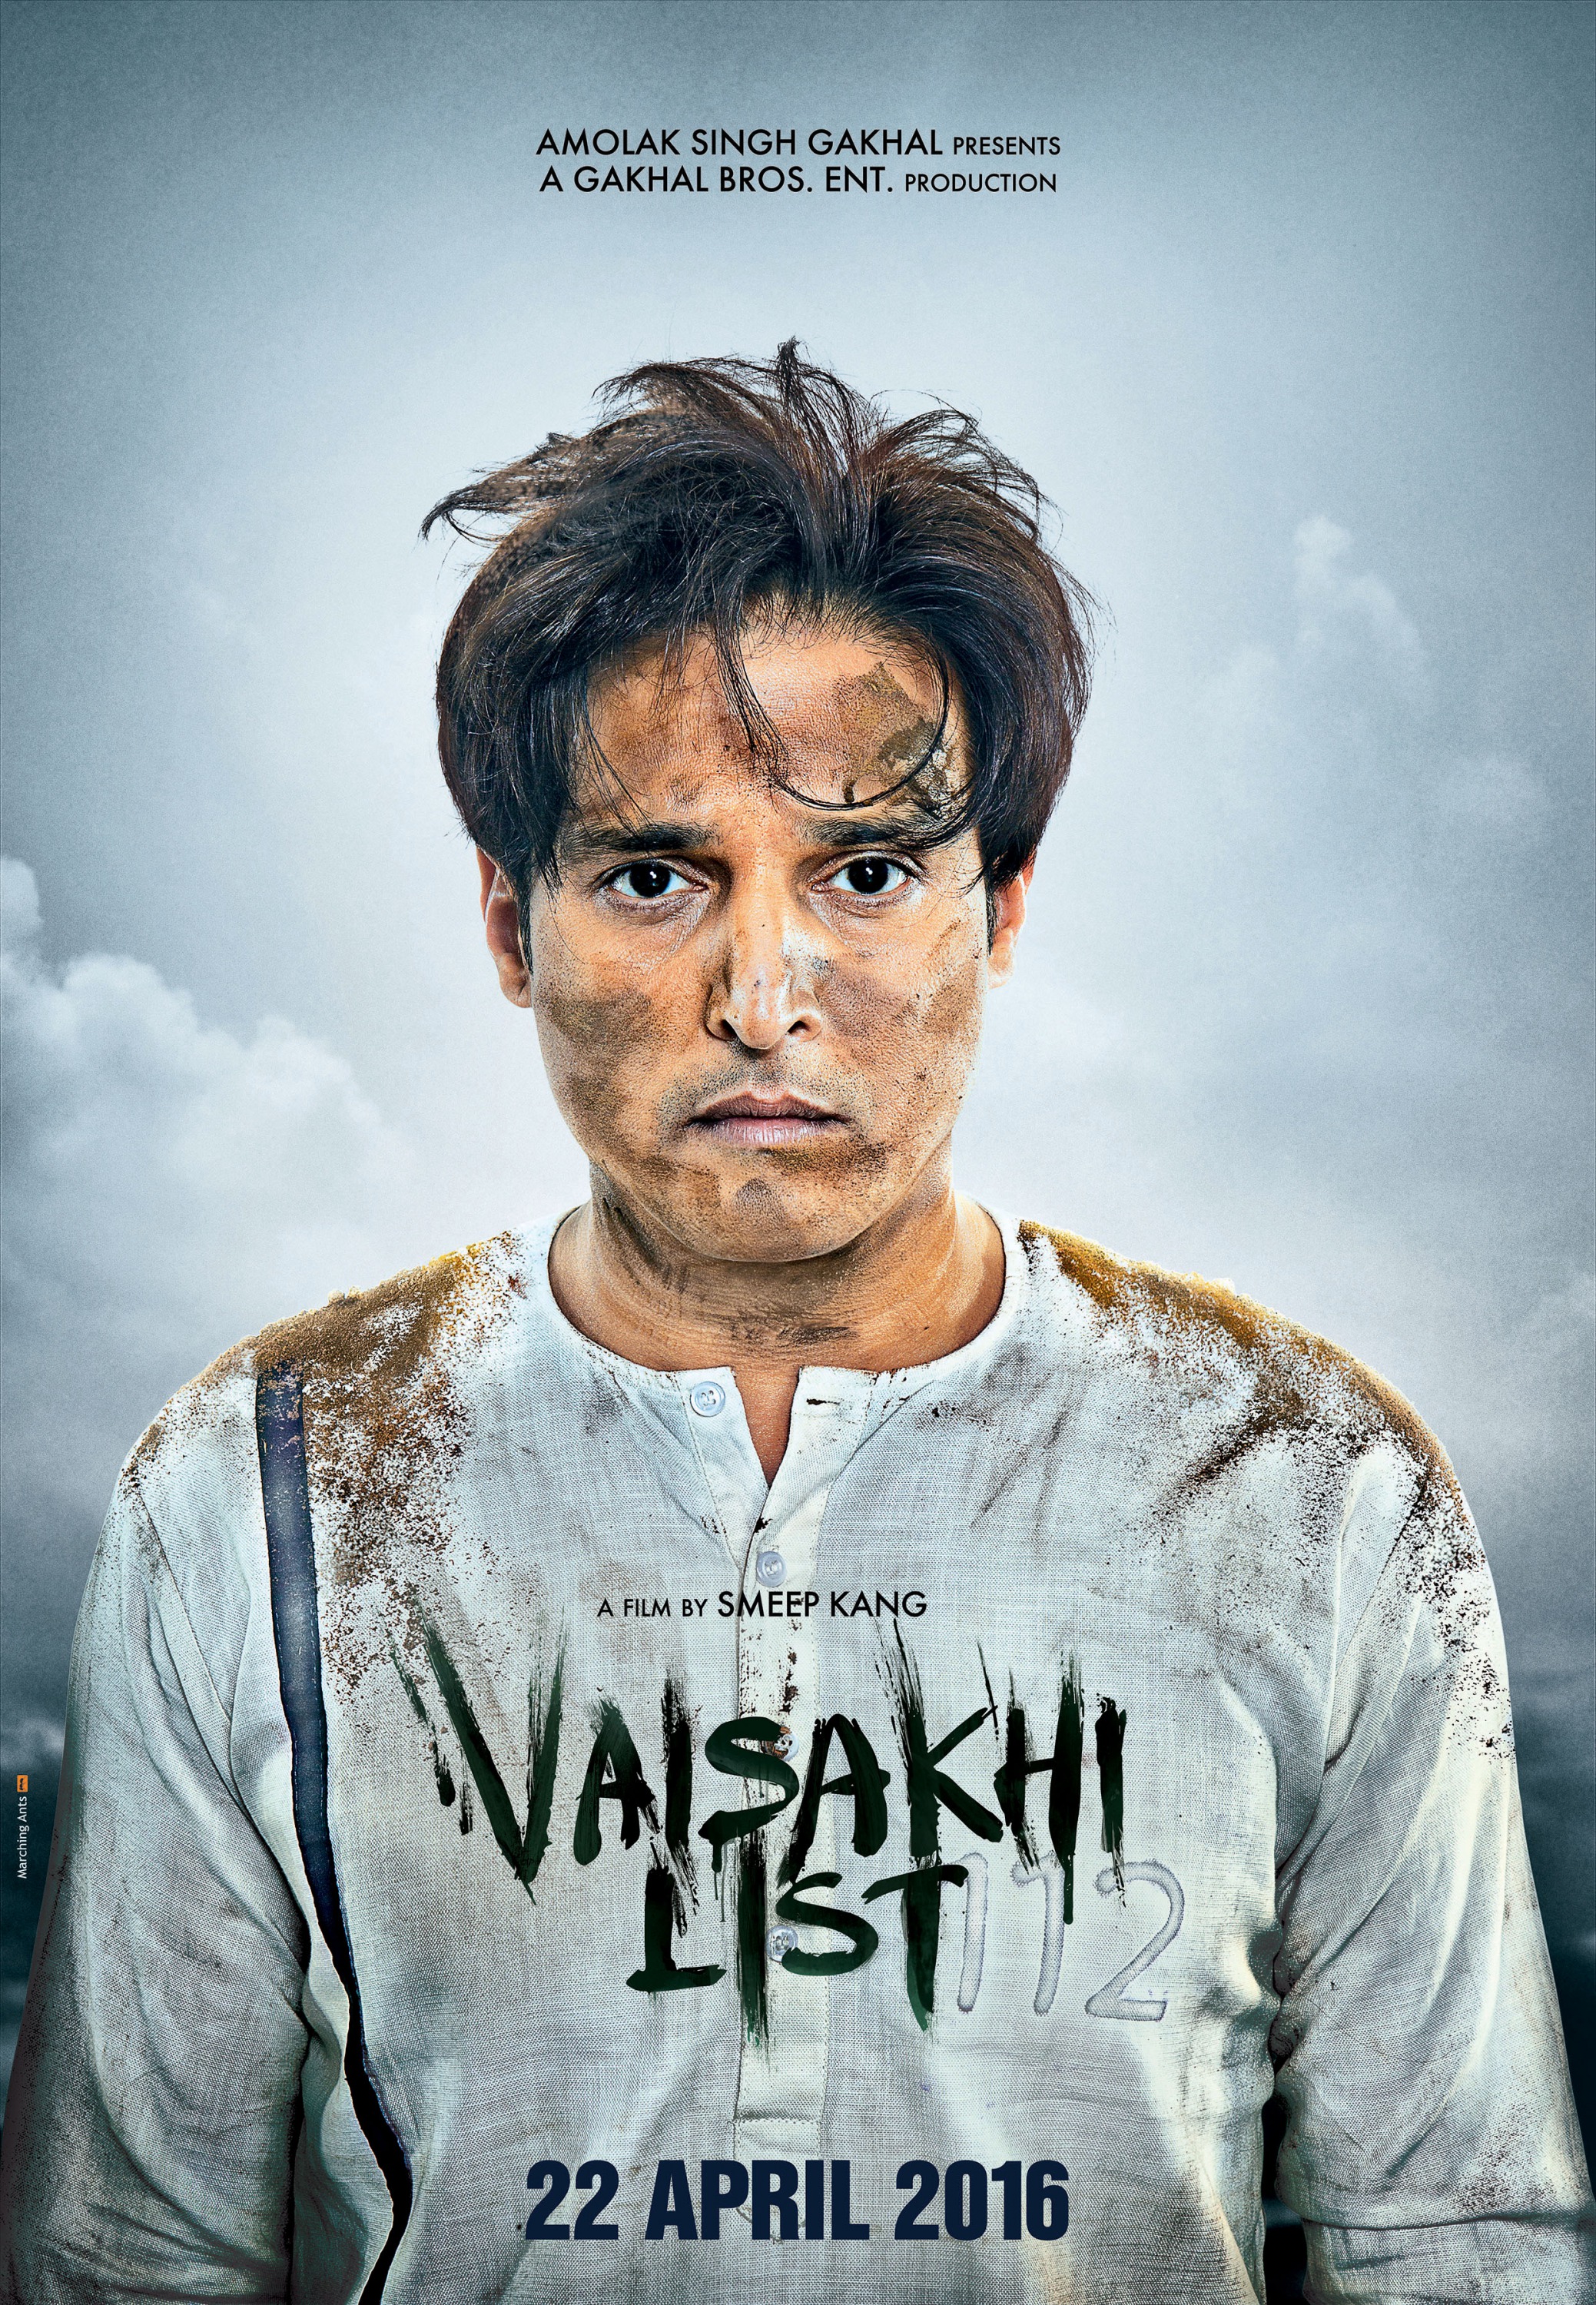 Mega Sized Movie Poster Image for Vaisakhi List (#6 of 6)